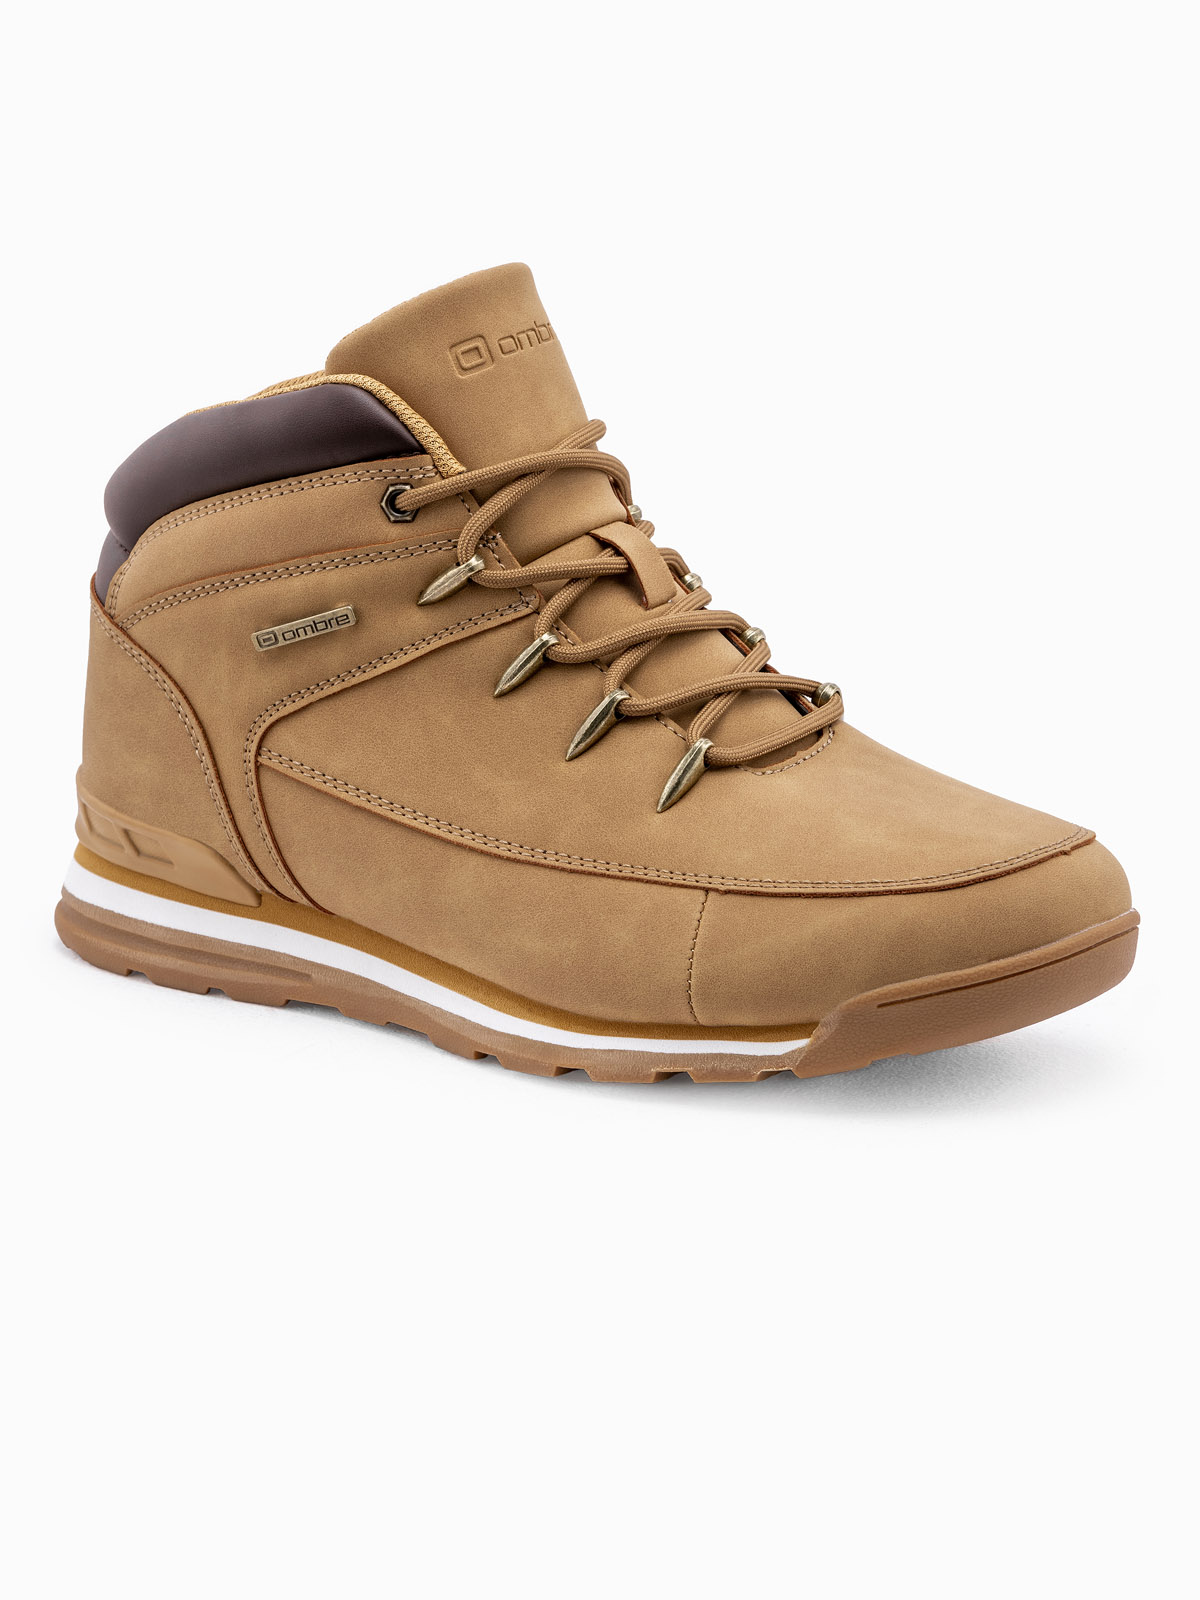 Men's winter shoes trappers T313 - beige | MODONE wholesale - Clothing ...